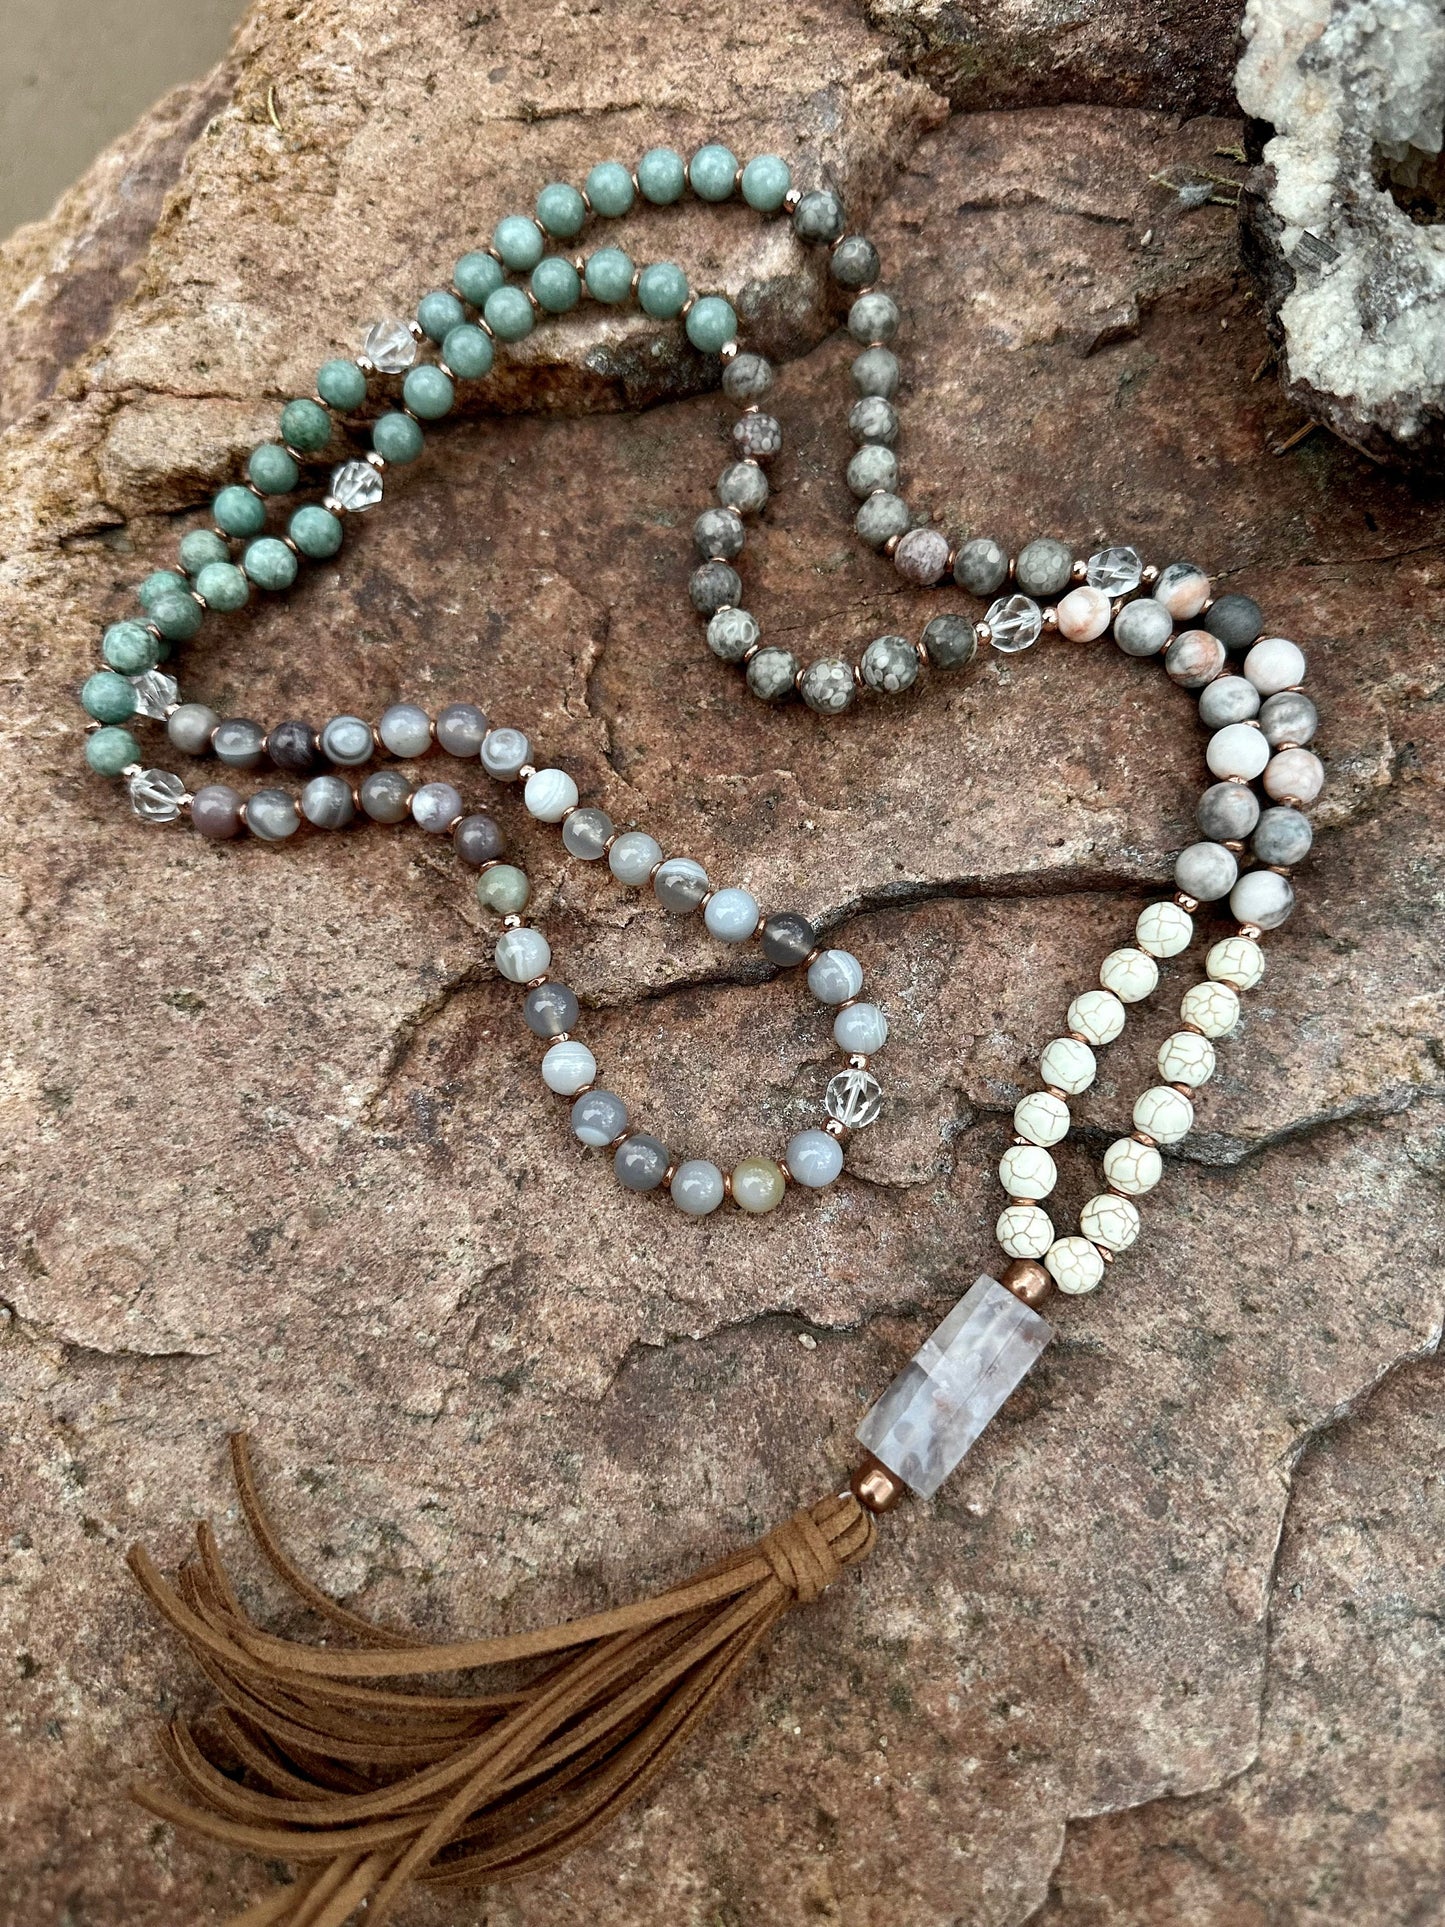 108 bead gemstone mala rare natural healing stone necklace wrapped bracelet jewelry gift for her meditation yoga practice mala prayer bangle